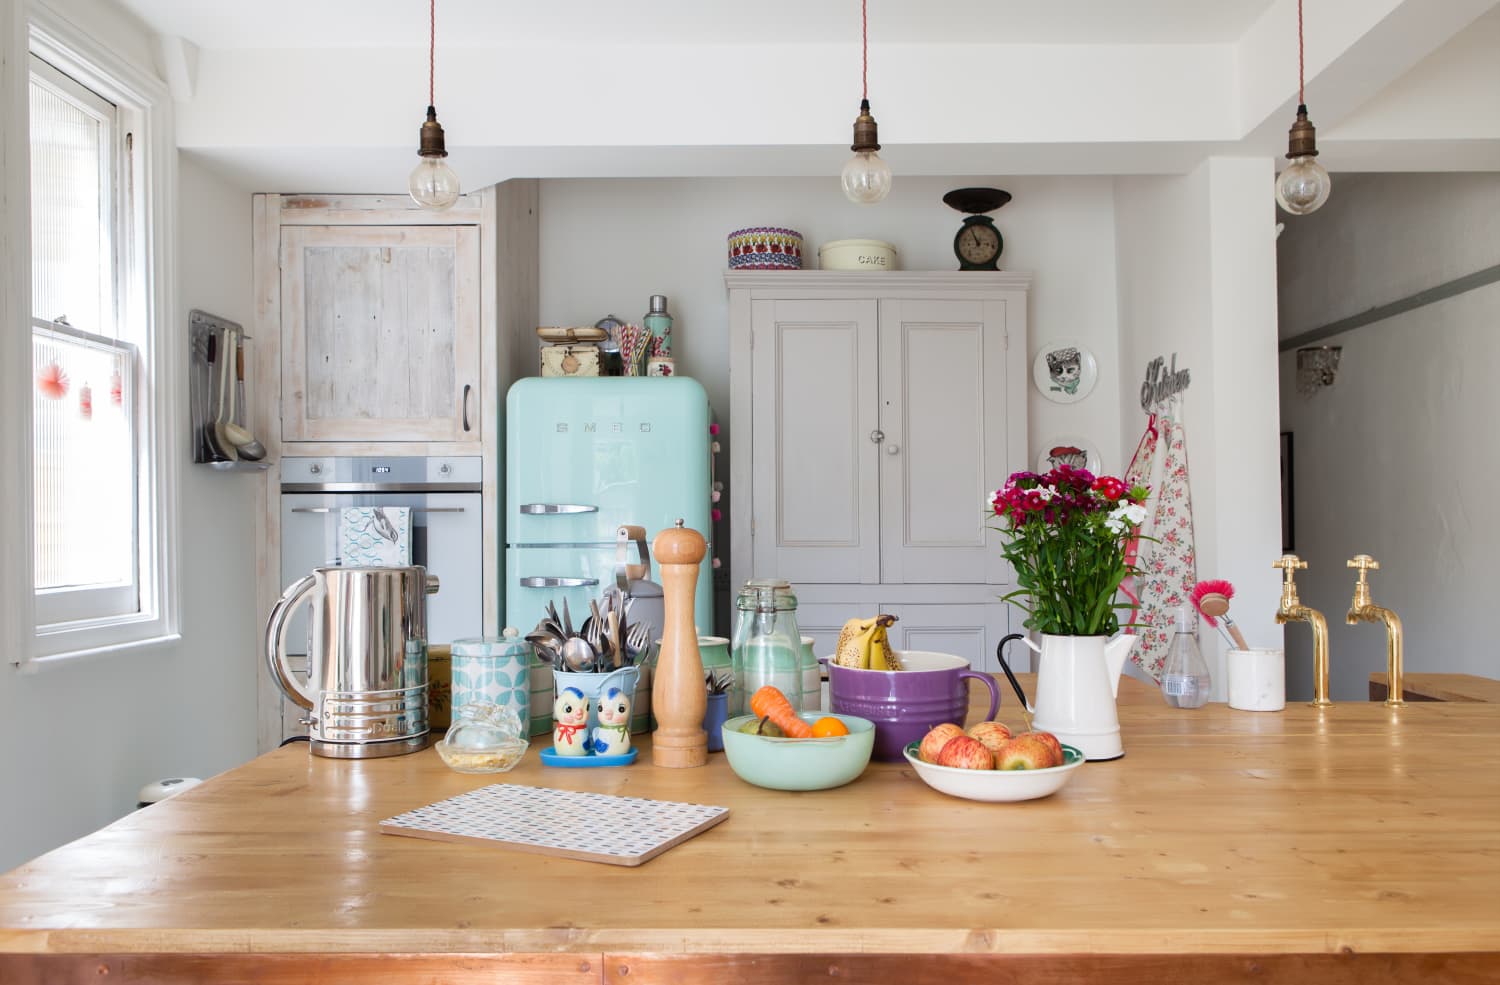 Smeg Appliances In Stylish Kitchens | Apartment Therapy